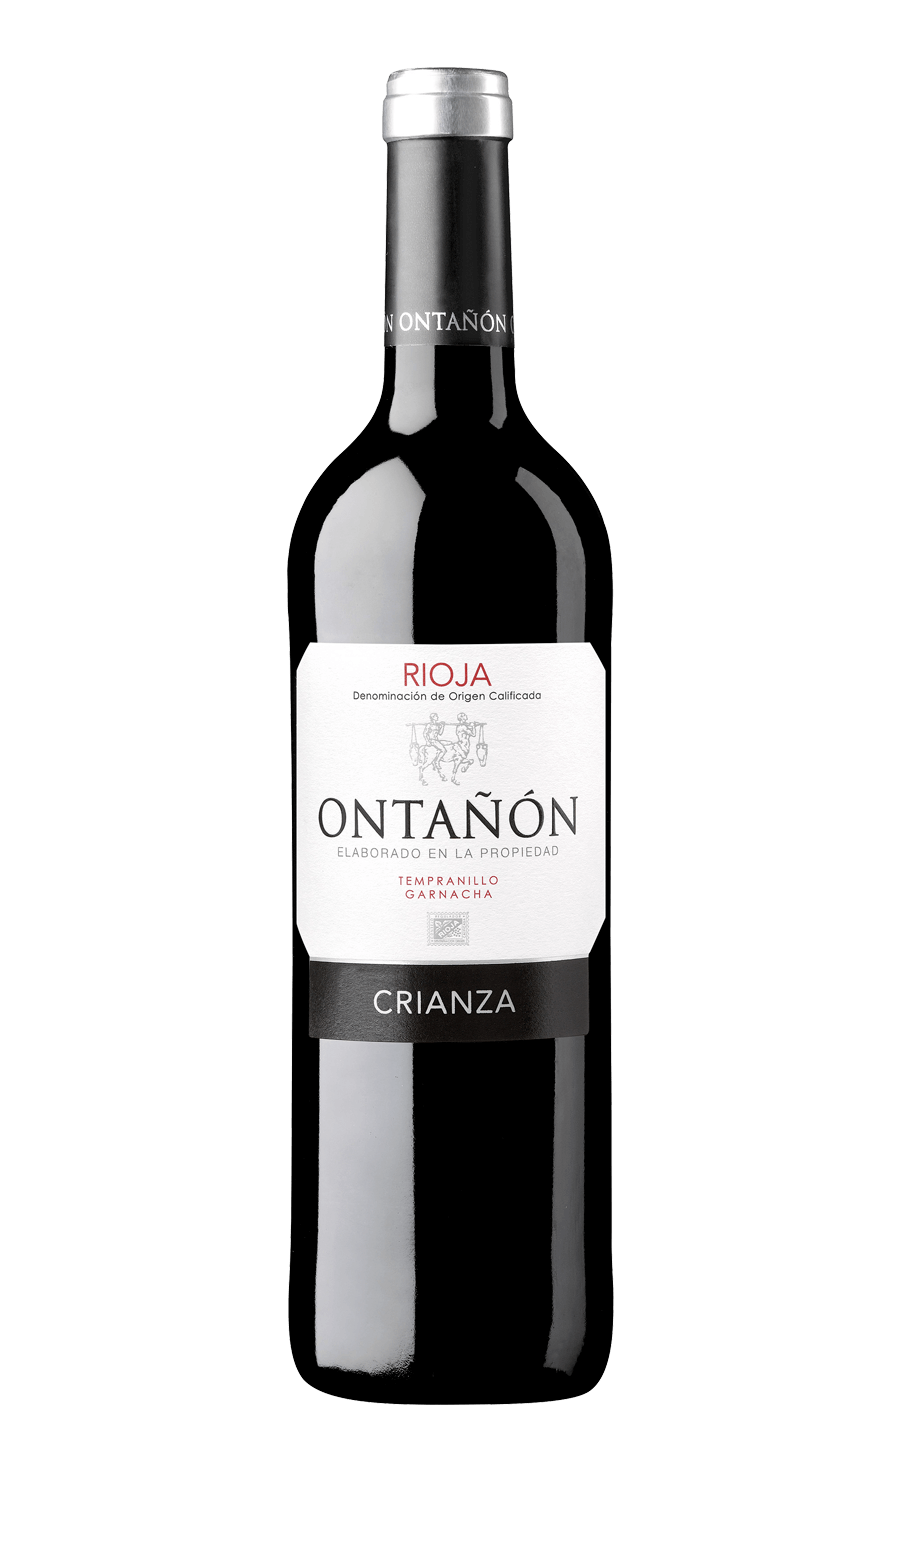 Ontanon Crianza Rioja - 750 ml bottle